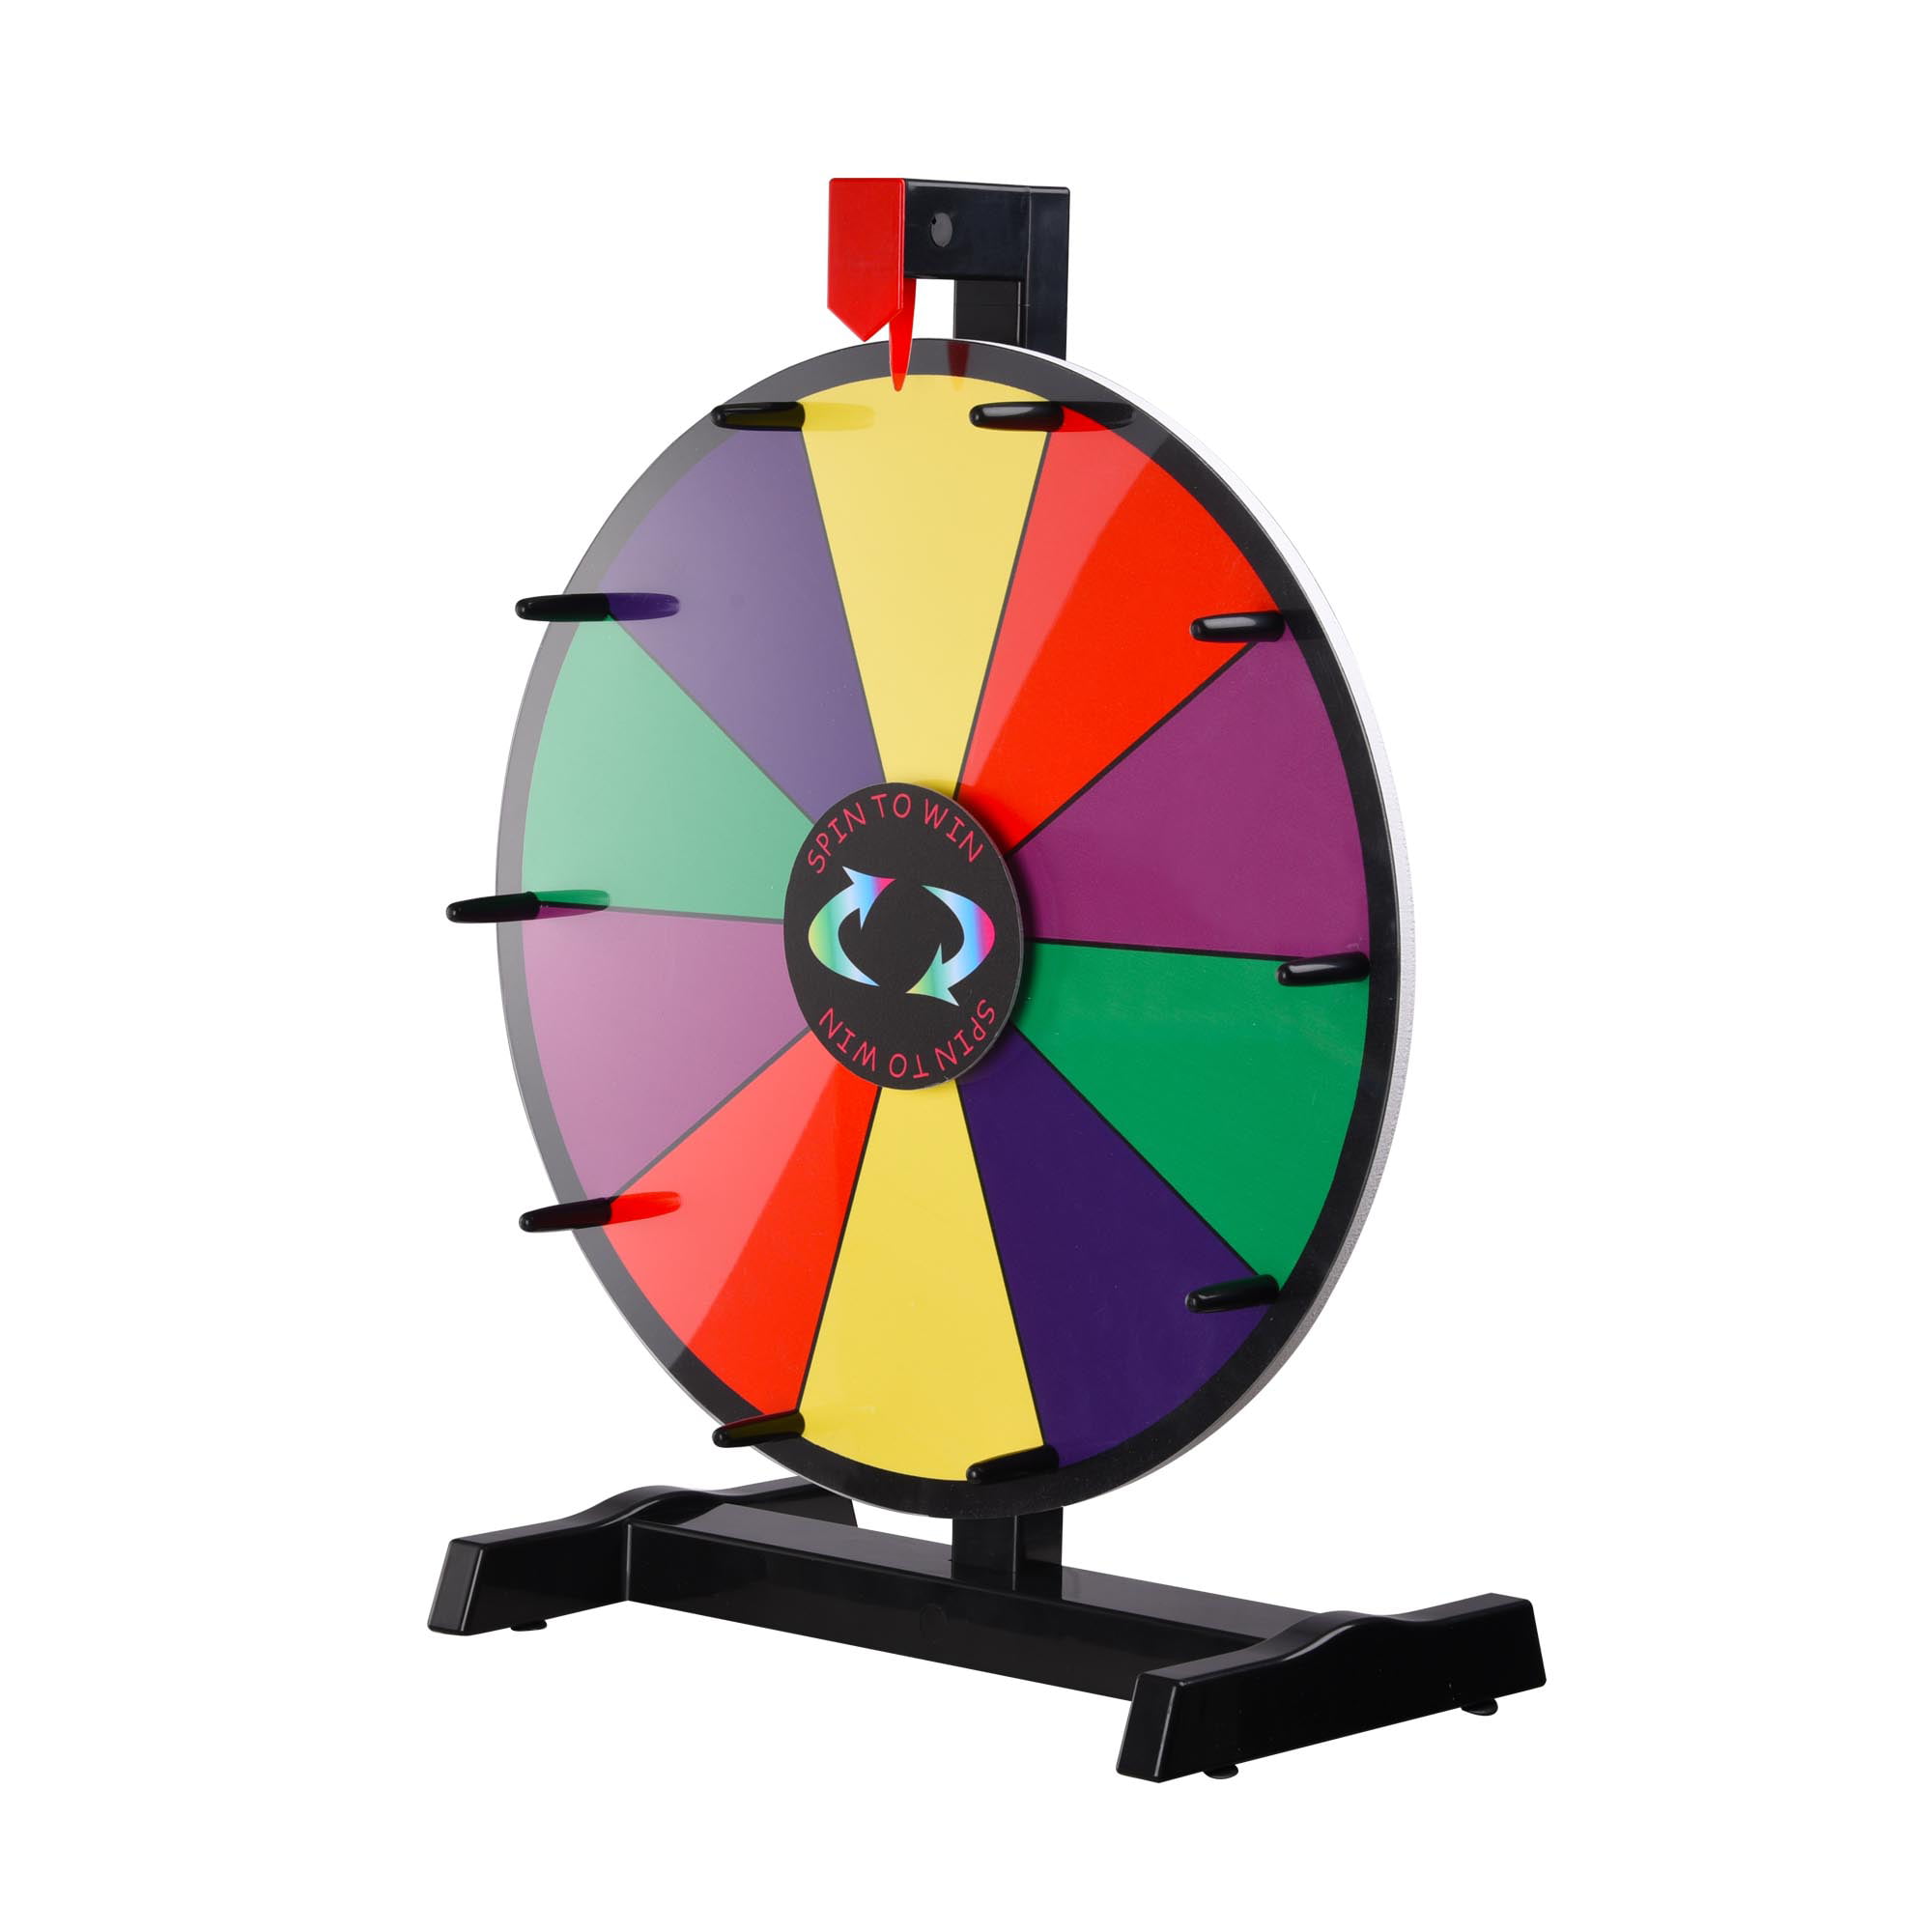 15" Tabletop Wheel of Fortune Spinning Game Editable Eraser 10 Slot Color Prize 